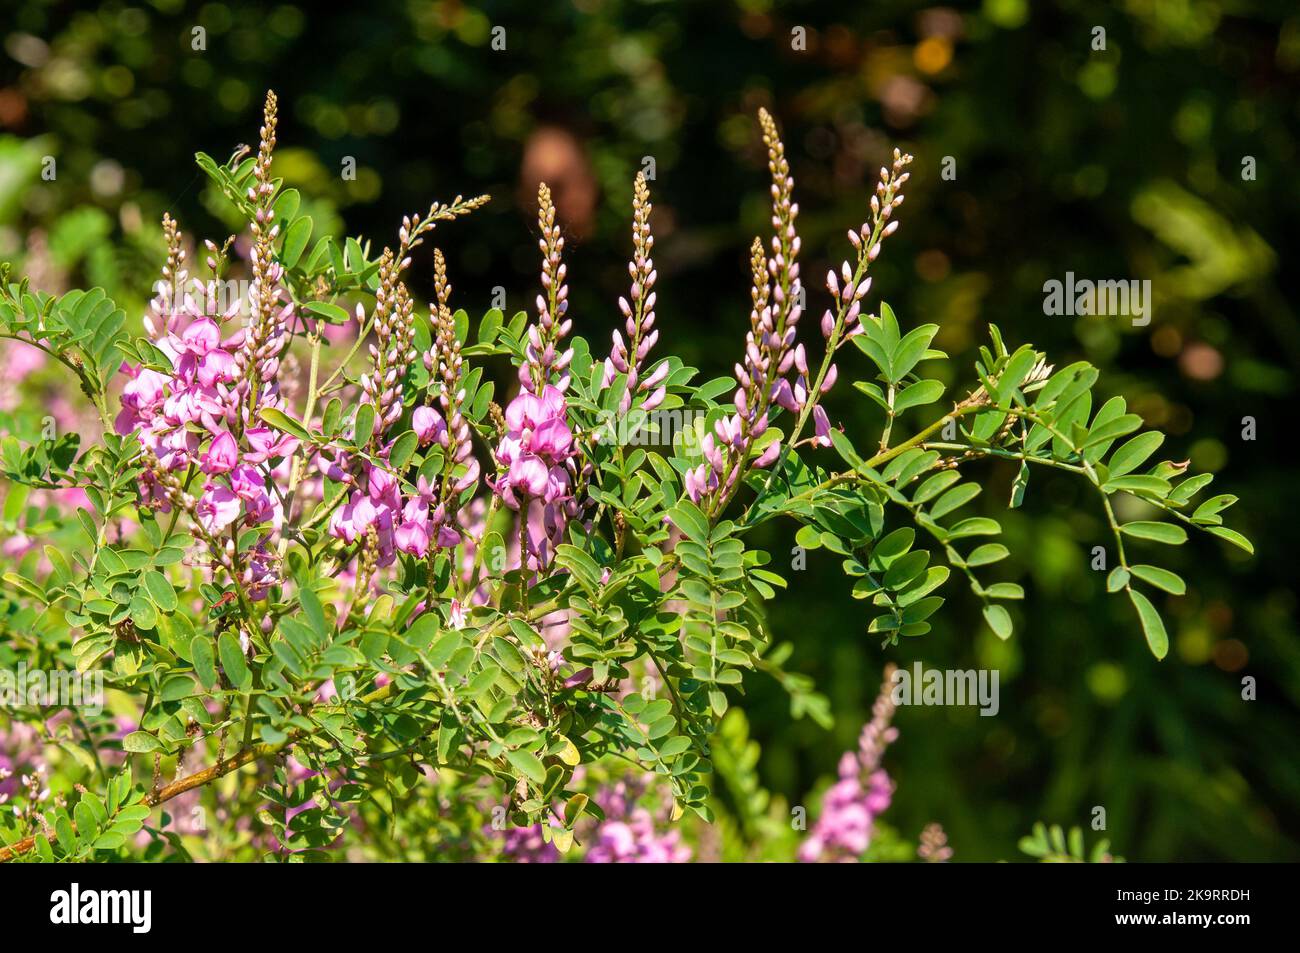 Sydney Australia, indigofera australis or australian indigo bush with mauve flowers Stock Photo